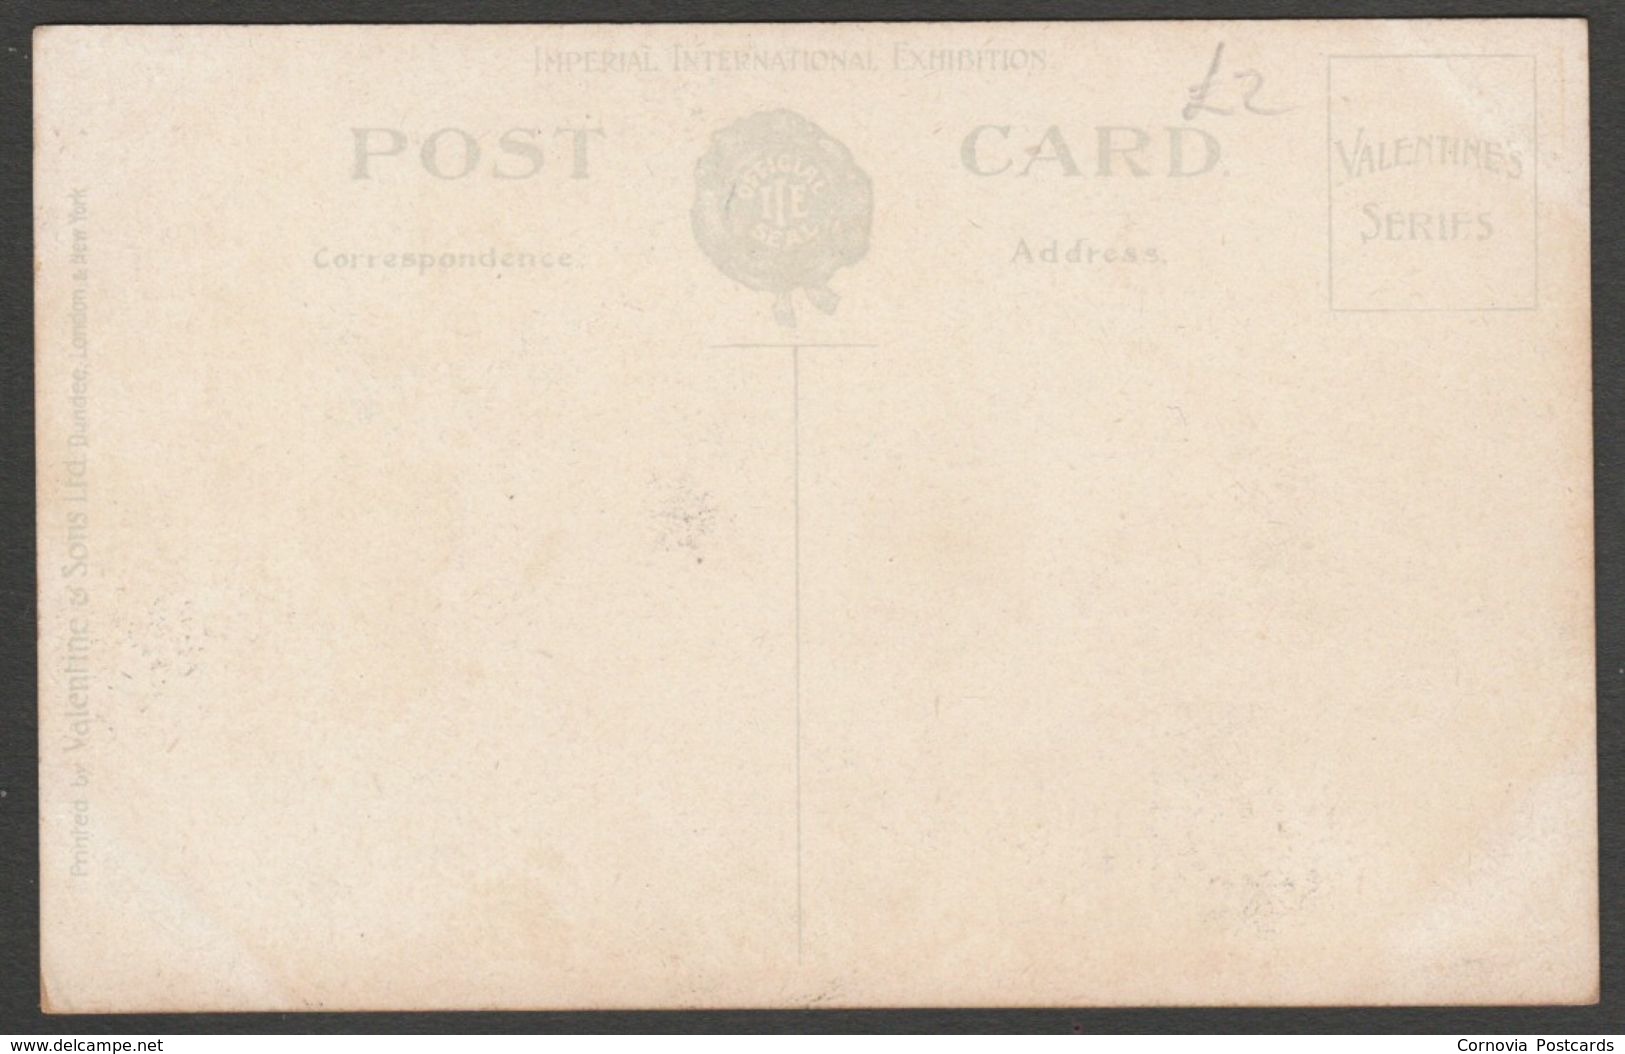 Scottish Village Post Office, Imperial International Exhibition, 1909 - Valentine's Postcard - Exhibitions